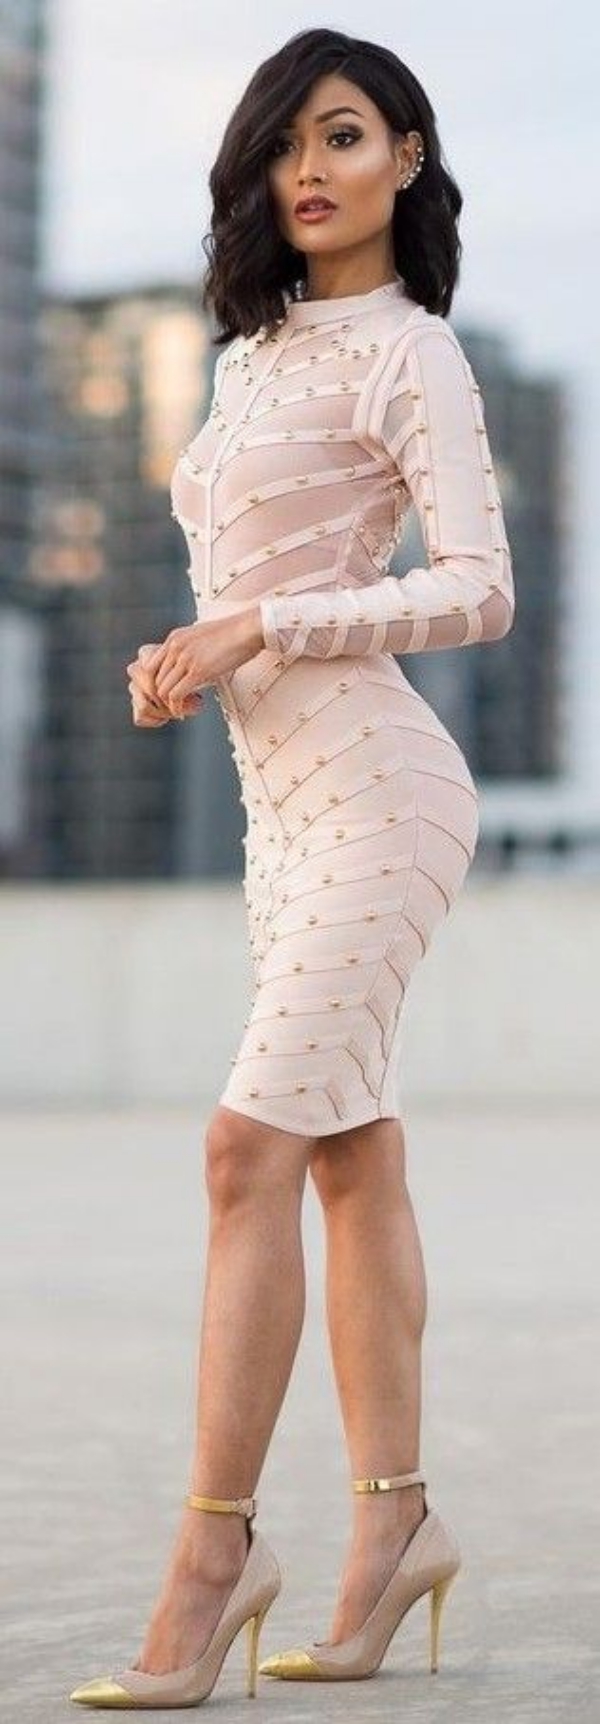 Bigg Boss 13's Shehnaaz Gill Looks Glamorous in Bodycon Dress, See Pic -  News18